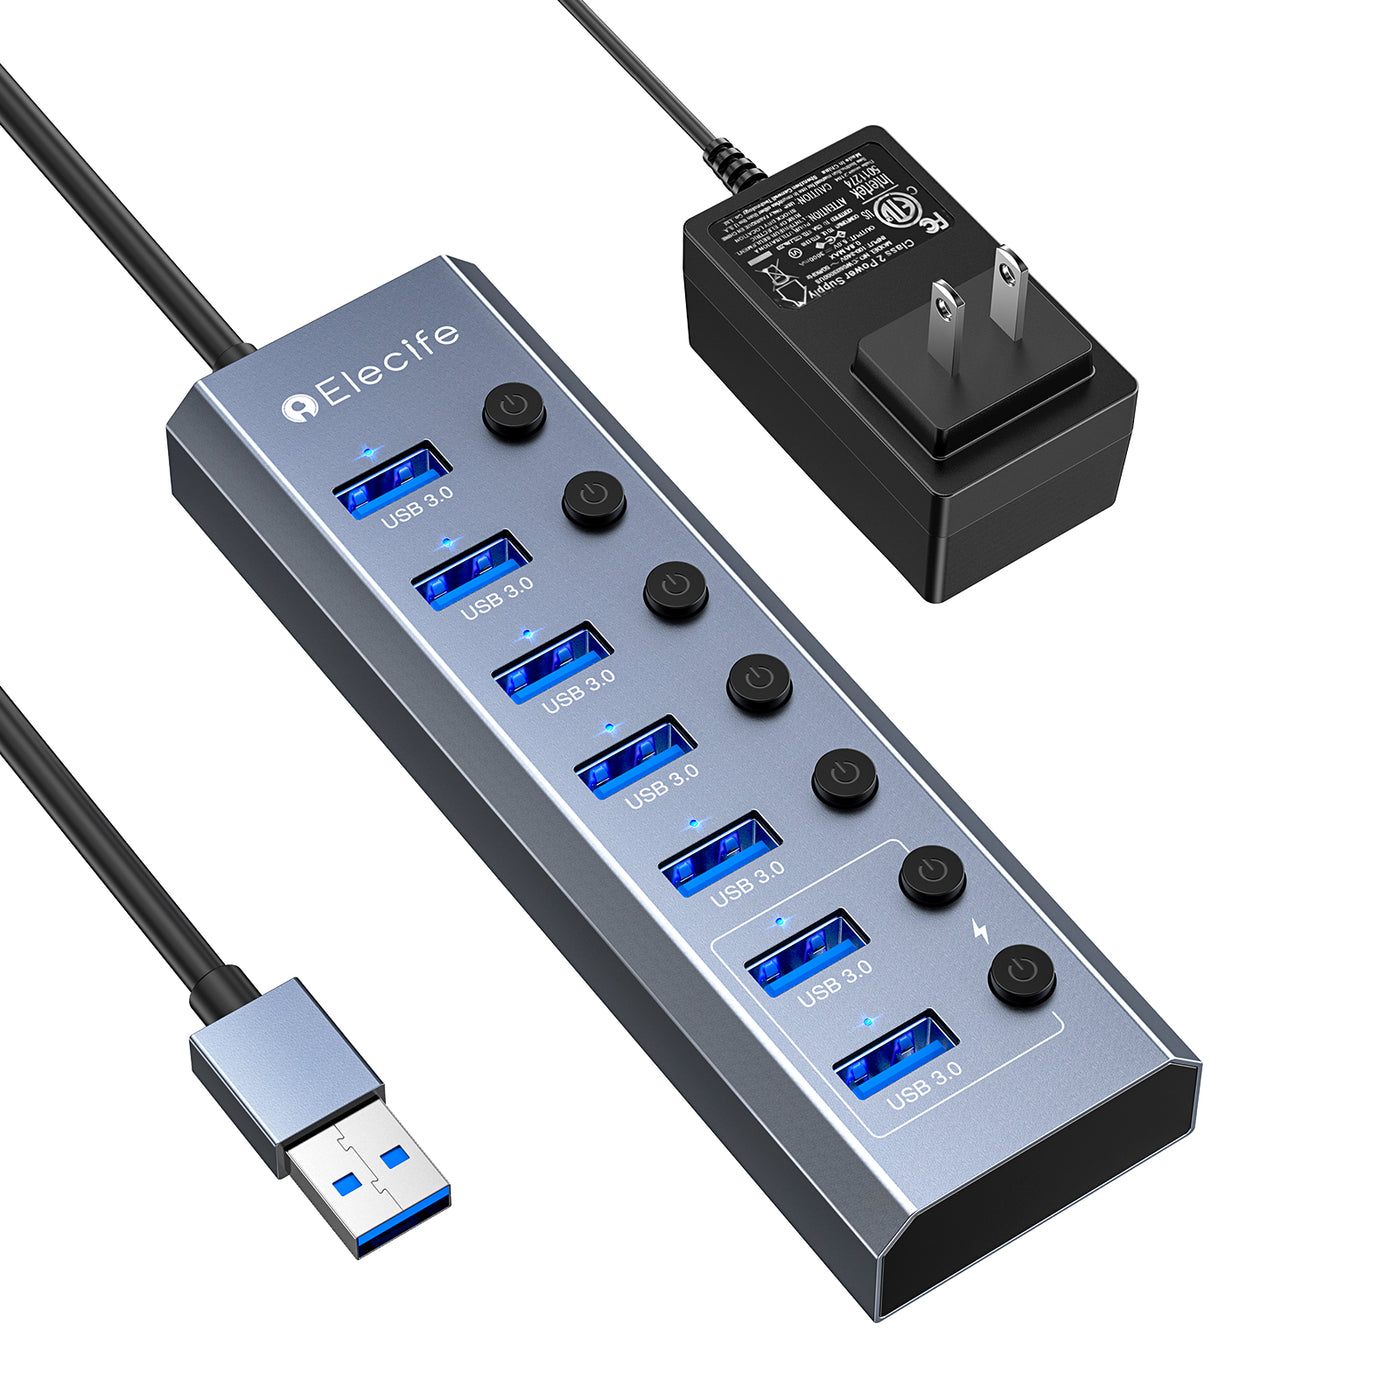 Elecife USB 3.0 Hub for 7-Port USB Data Hub – elecife